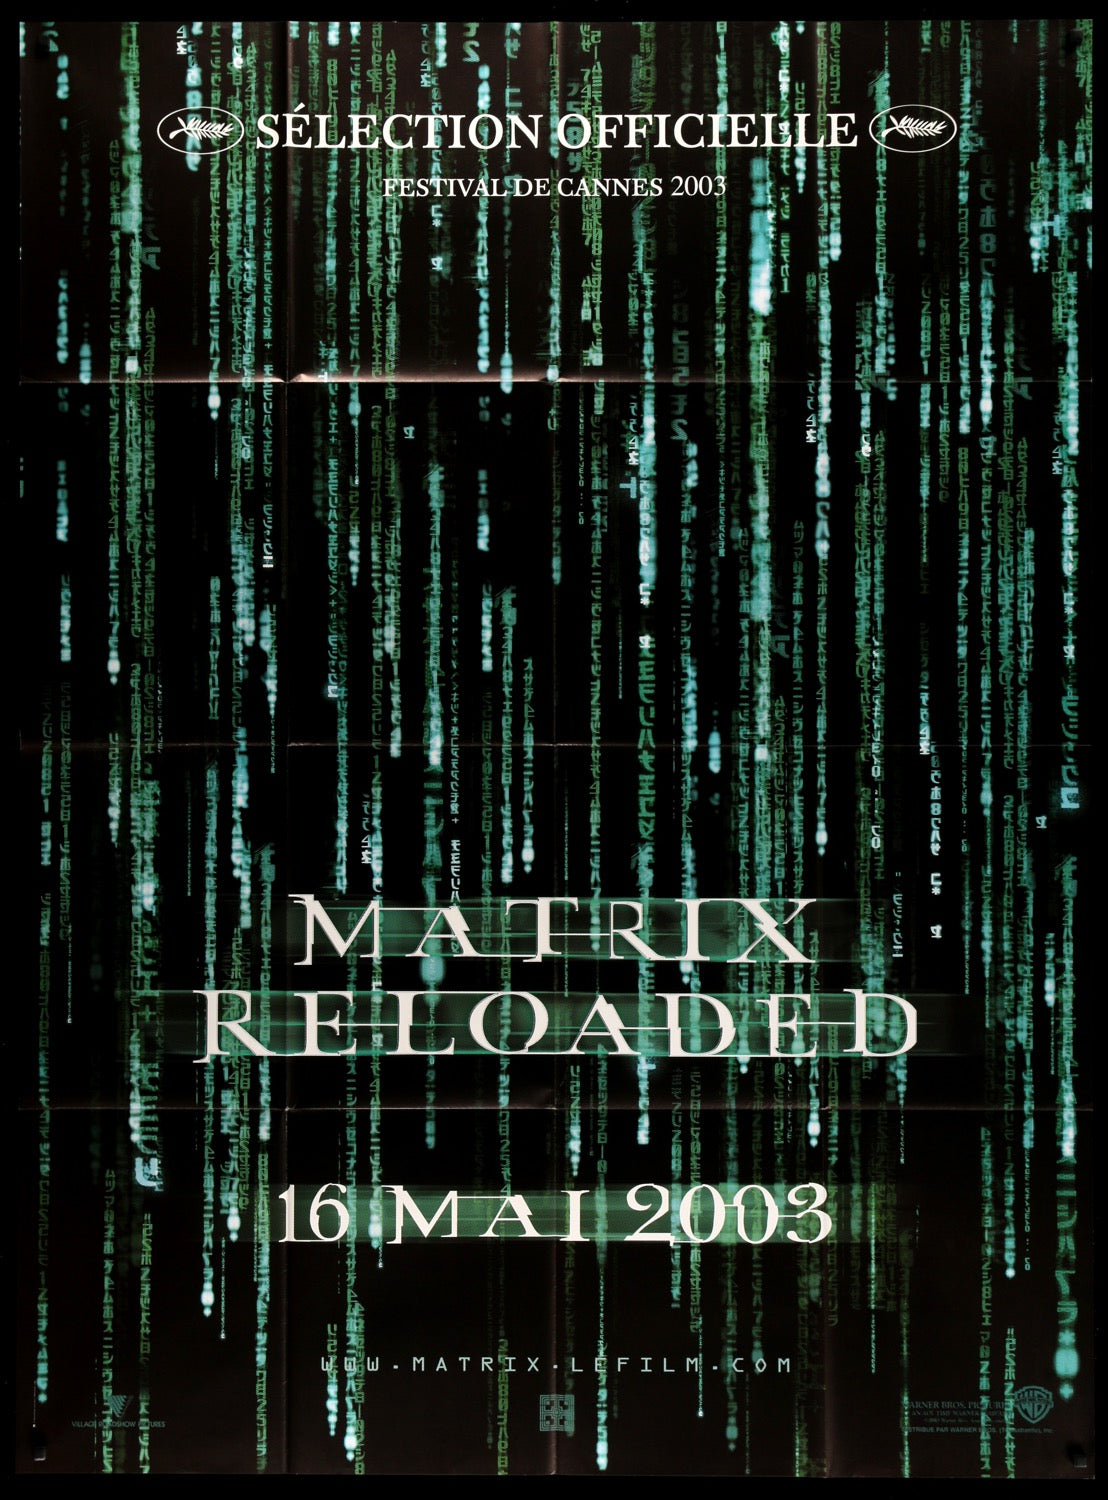 Matrix Reloaded (2003) original movie poster for sale at Original Film Art